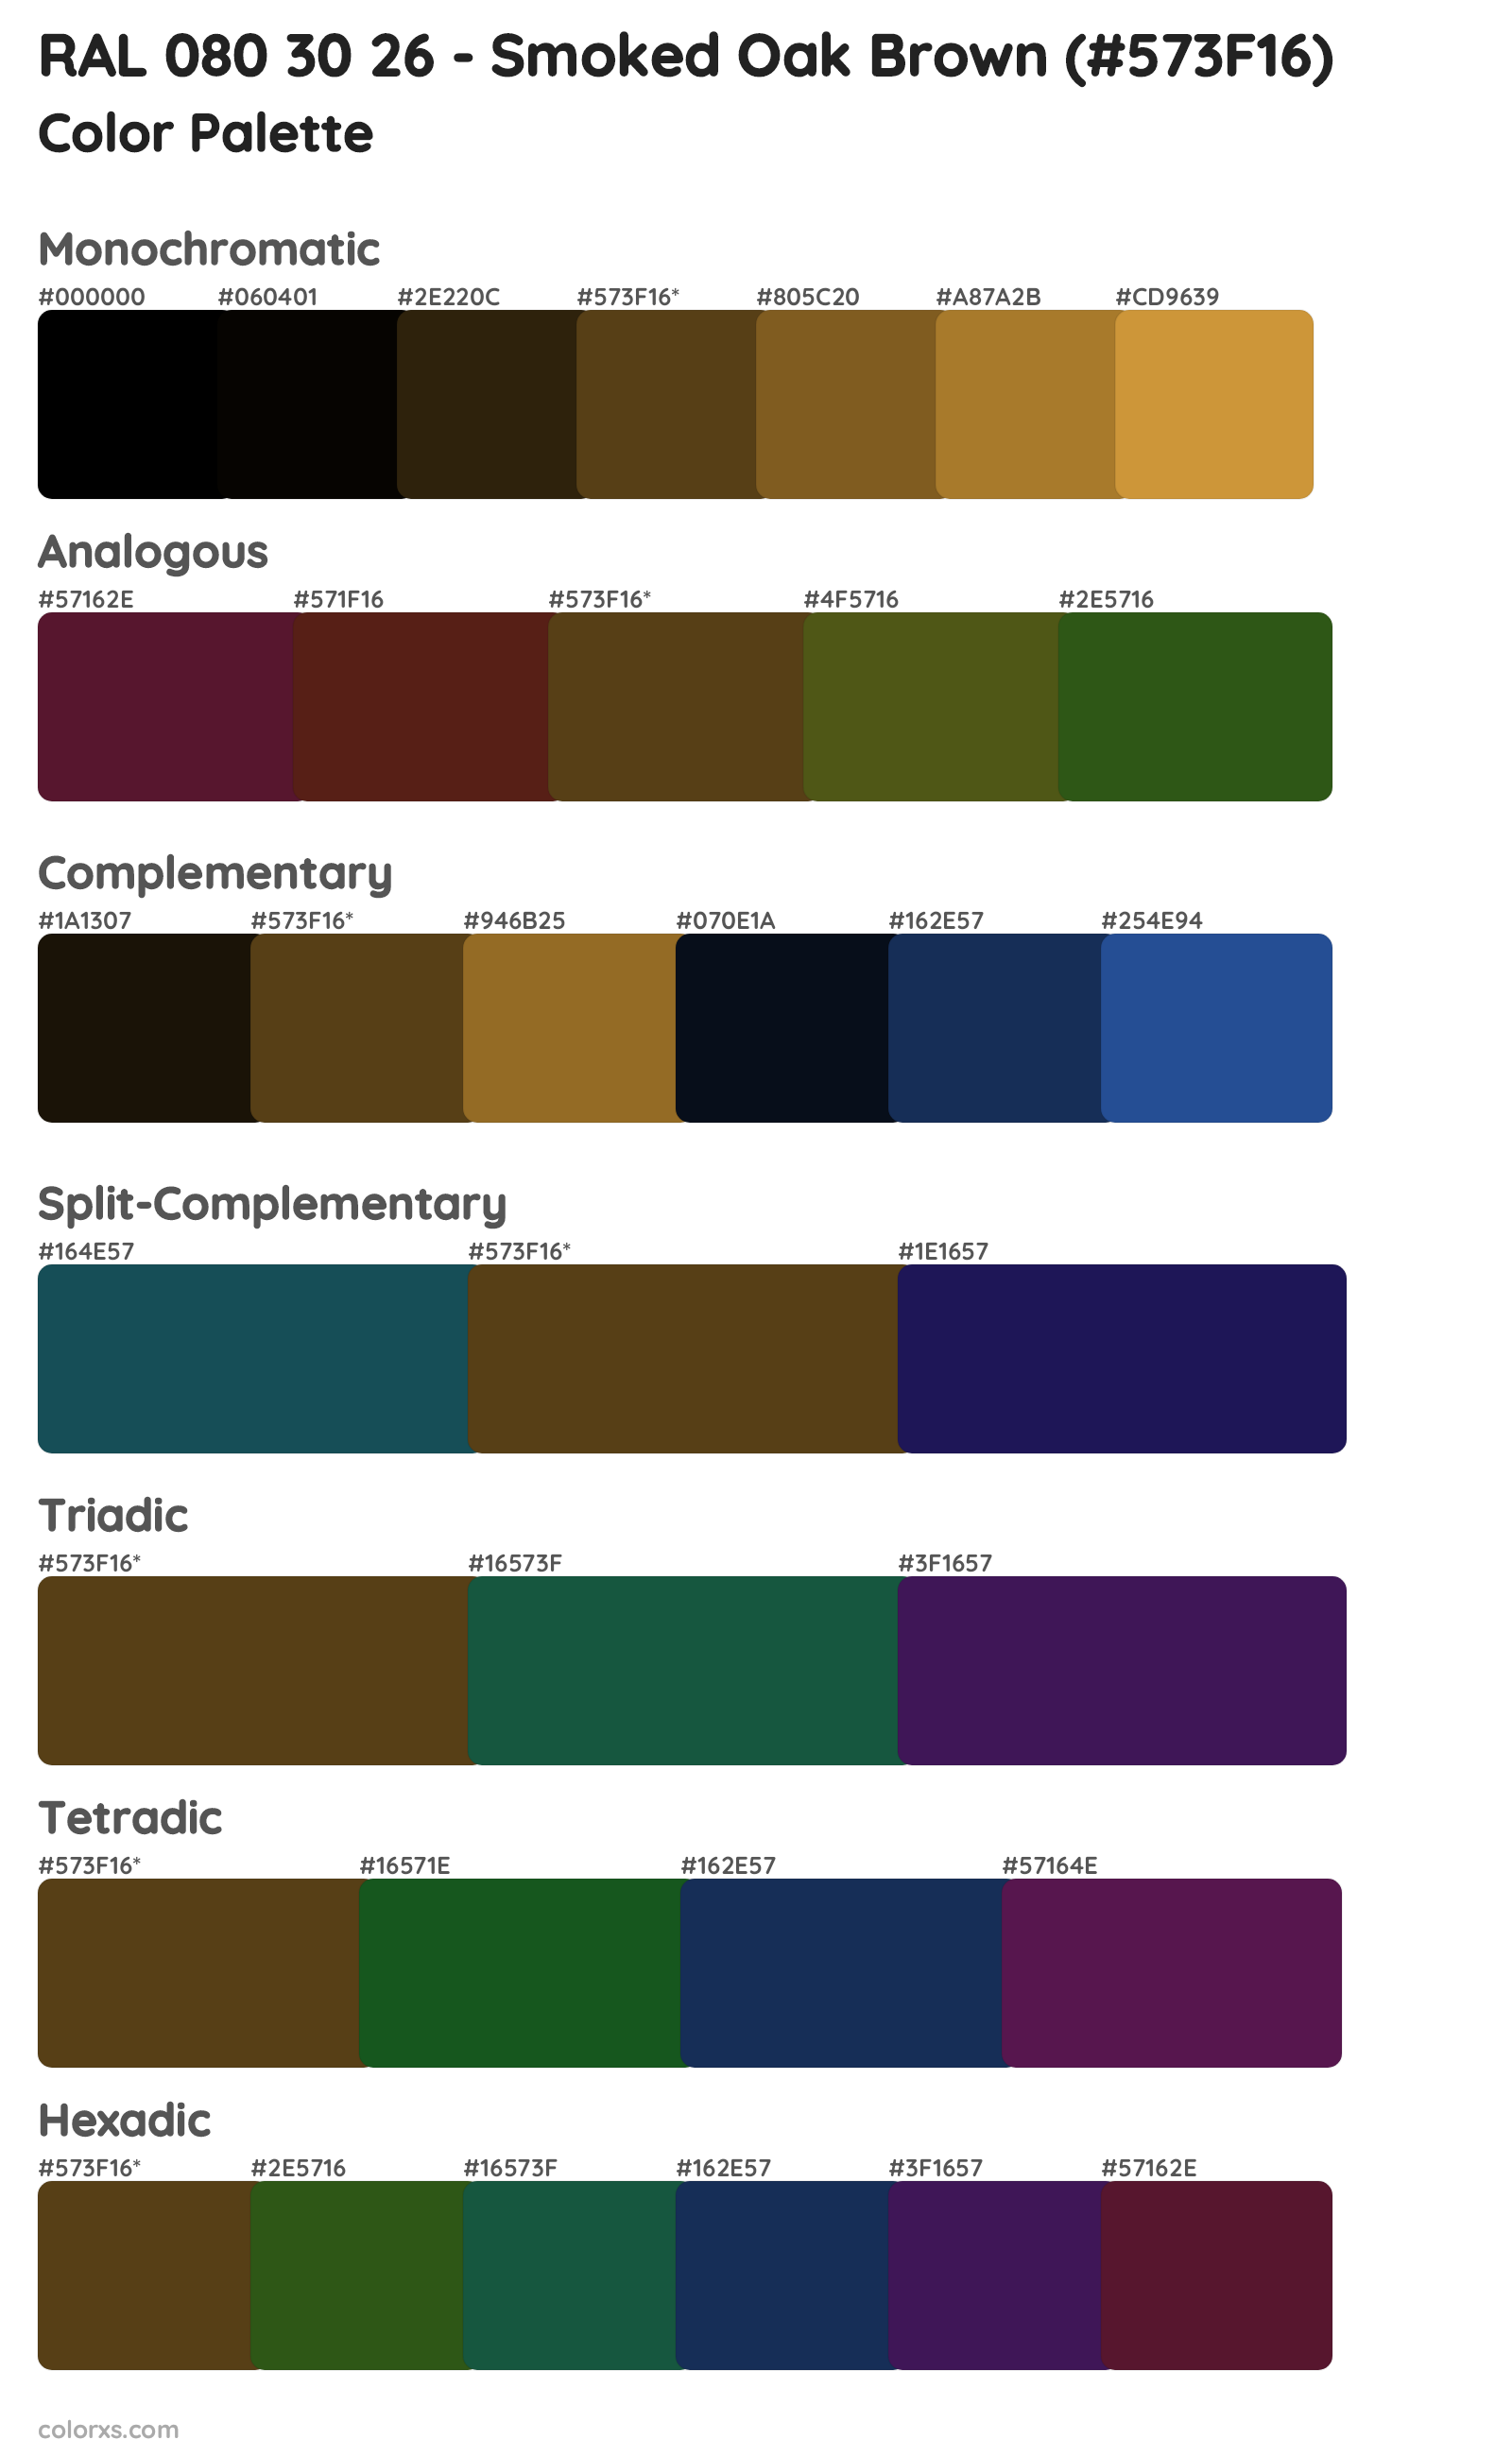 RAL 080 30 26 - Smoked Oak Brown Color Scheme Palettes